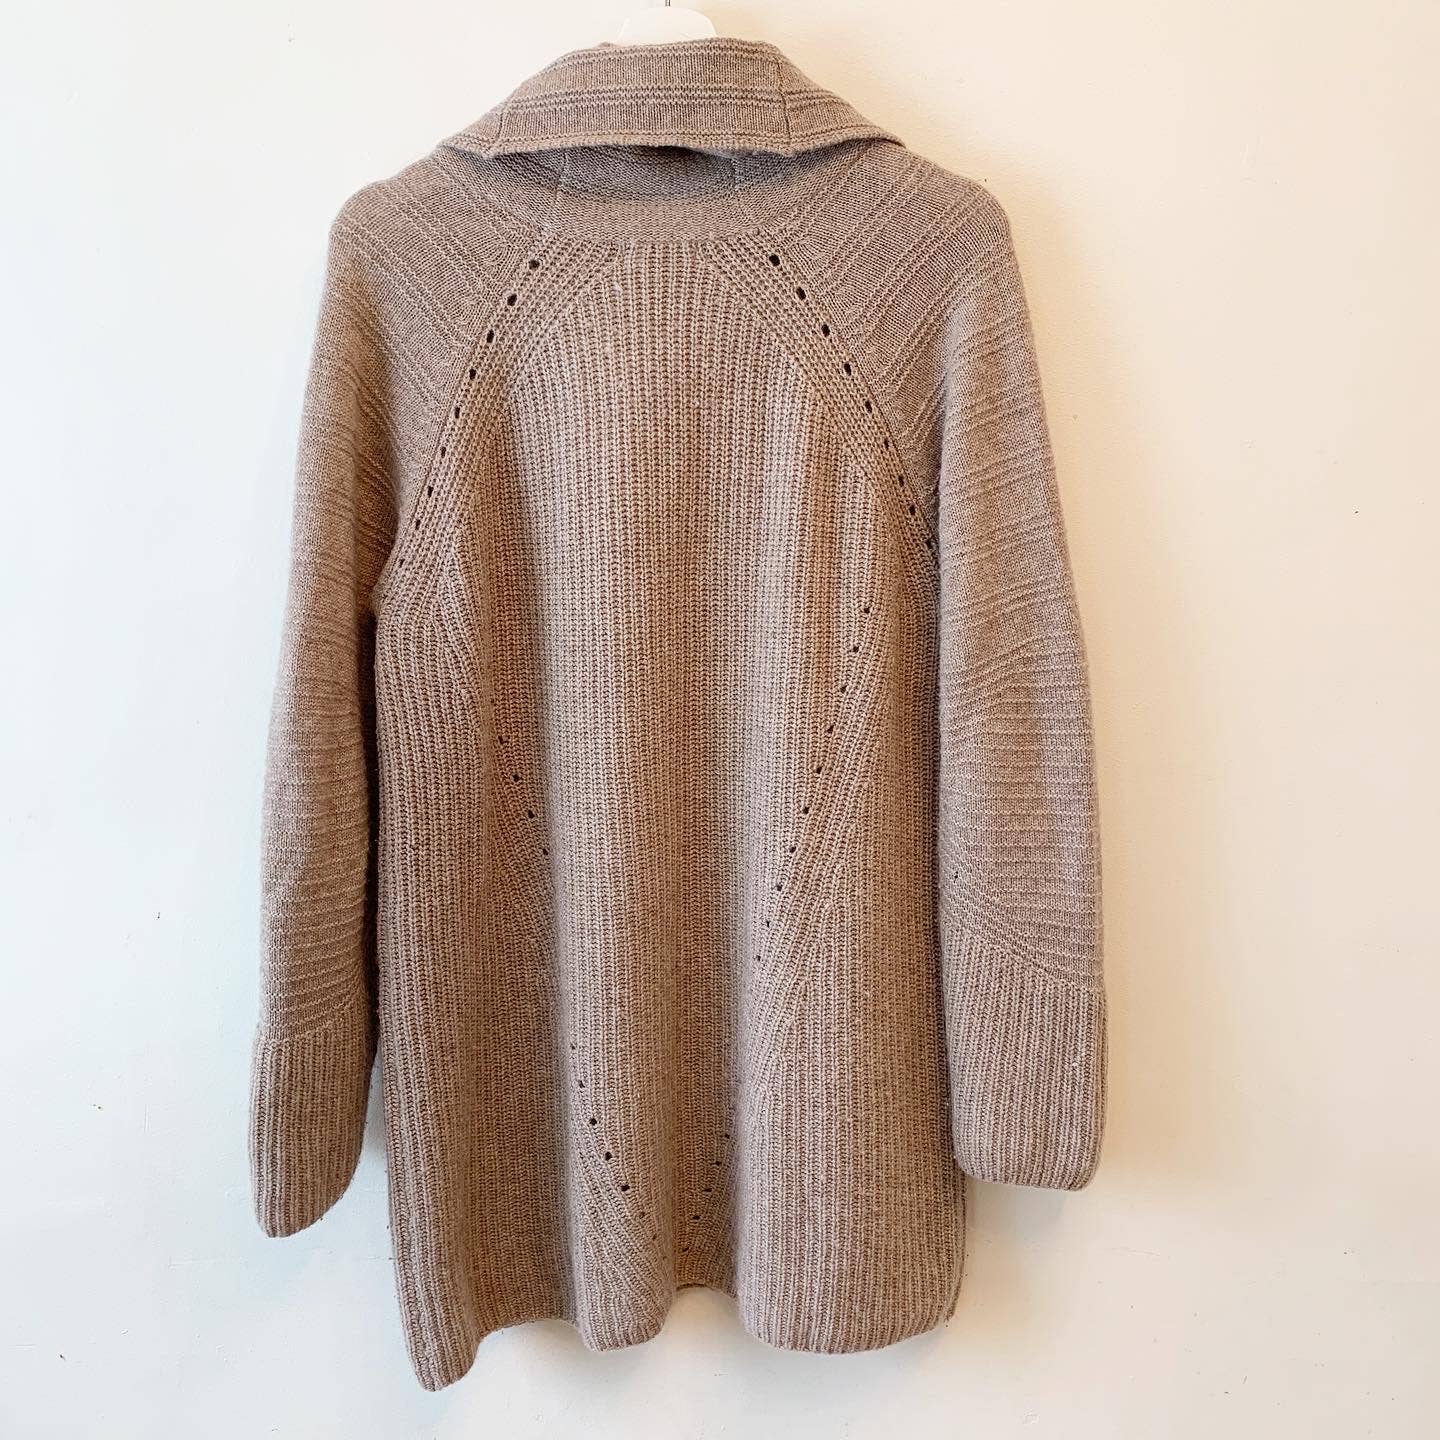 Neiman Marcus Tan Cashmere Cowl Neck Sweater